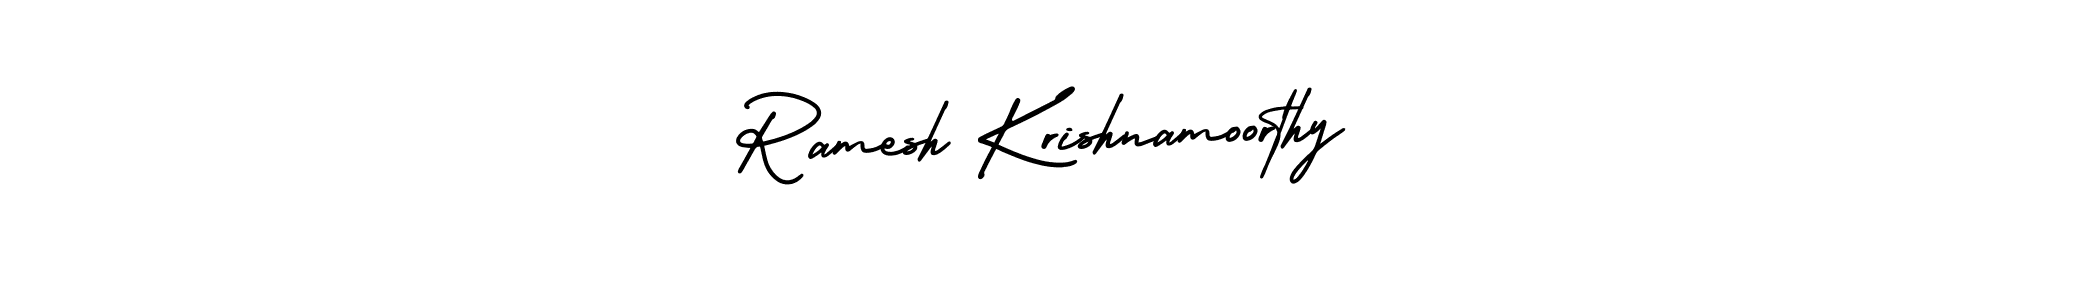 Best and Professional Signature Style for Ramesh Krishnamoorthy. AmerikaSignatureDemo-Regular Best Signature Style Collection. Ramesh Krishnamoorthy signature style 3 images and pictures png